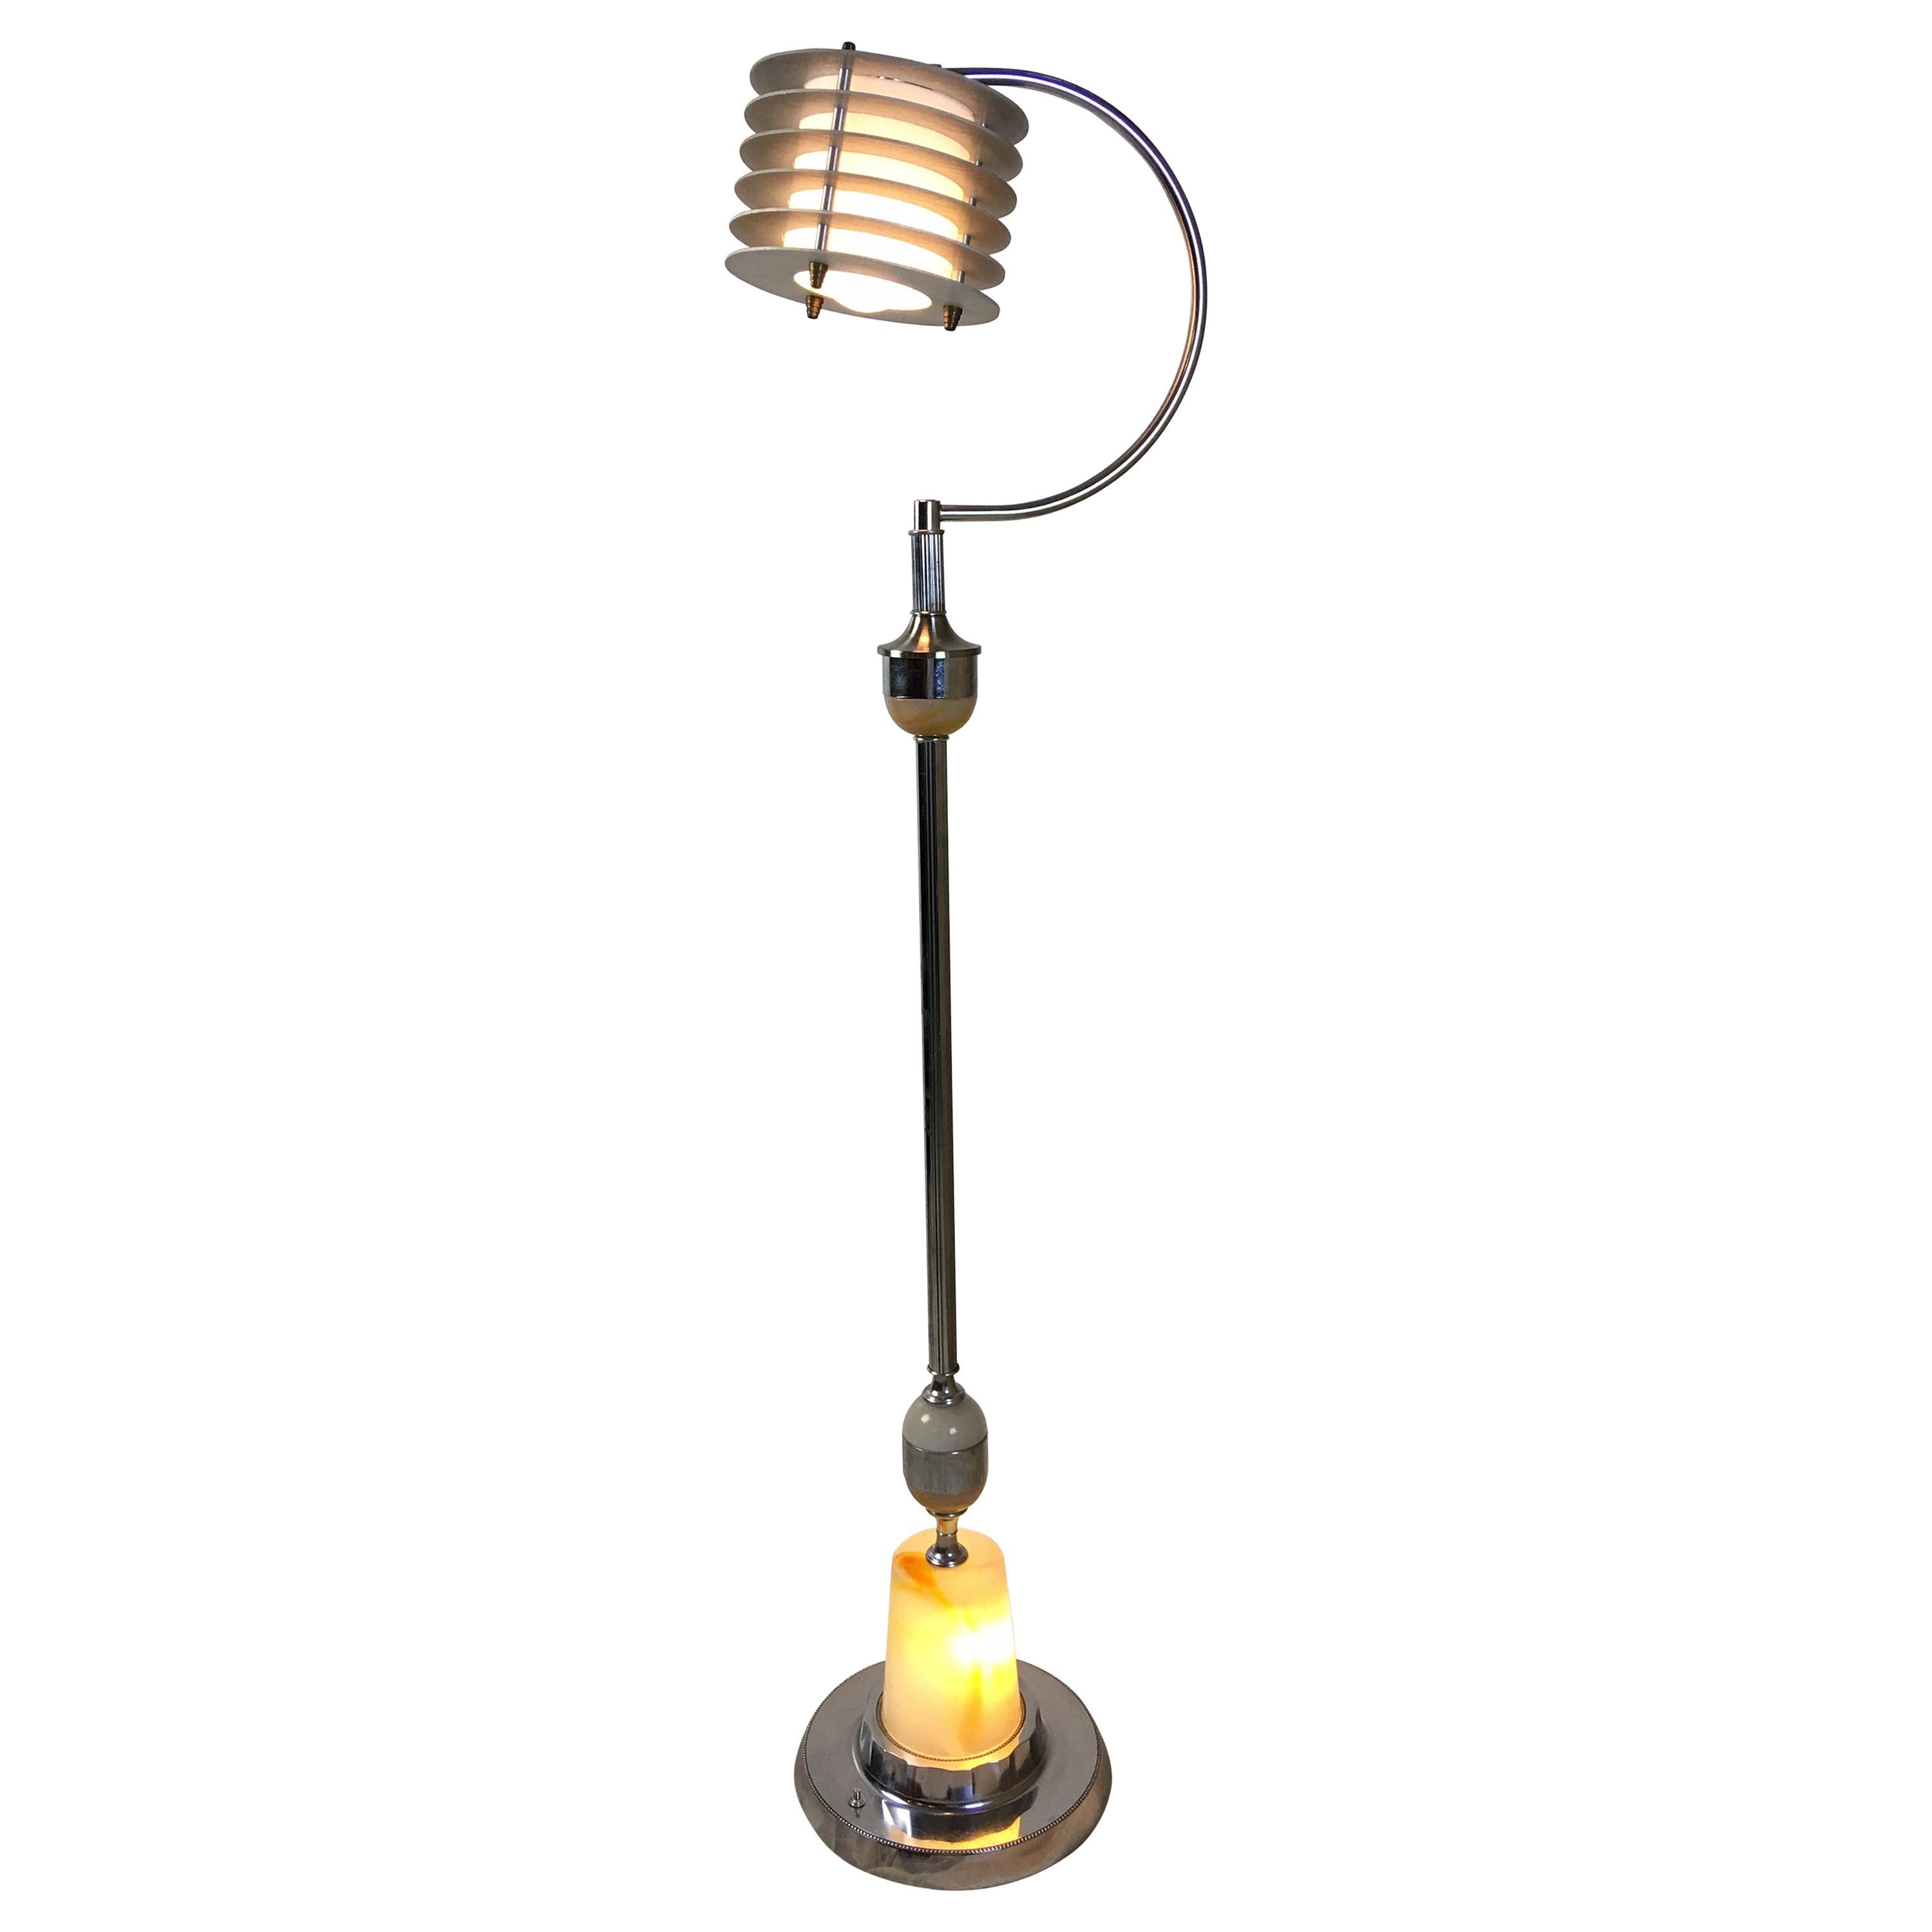 ABCO Art Deco Chrome Floor Lamp with Light Up Base